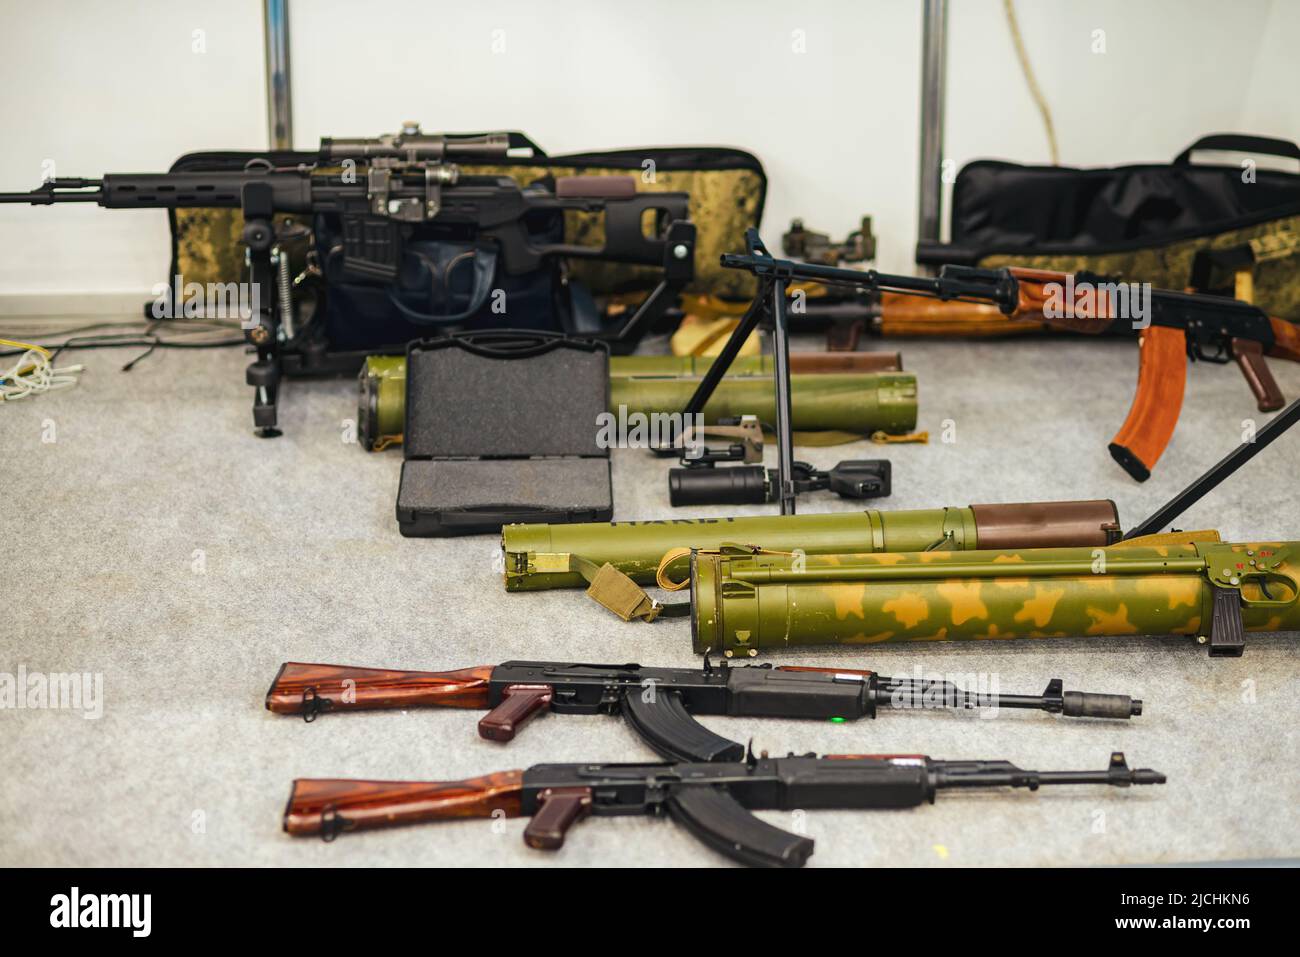 Arsenal of weapons. Anti-tank missile system, Kalashnikov assault rifles, machine guns. Stock Photo